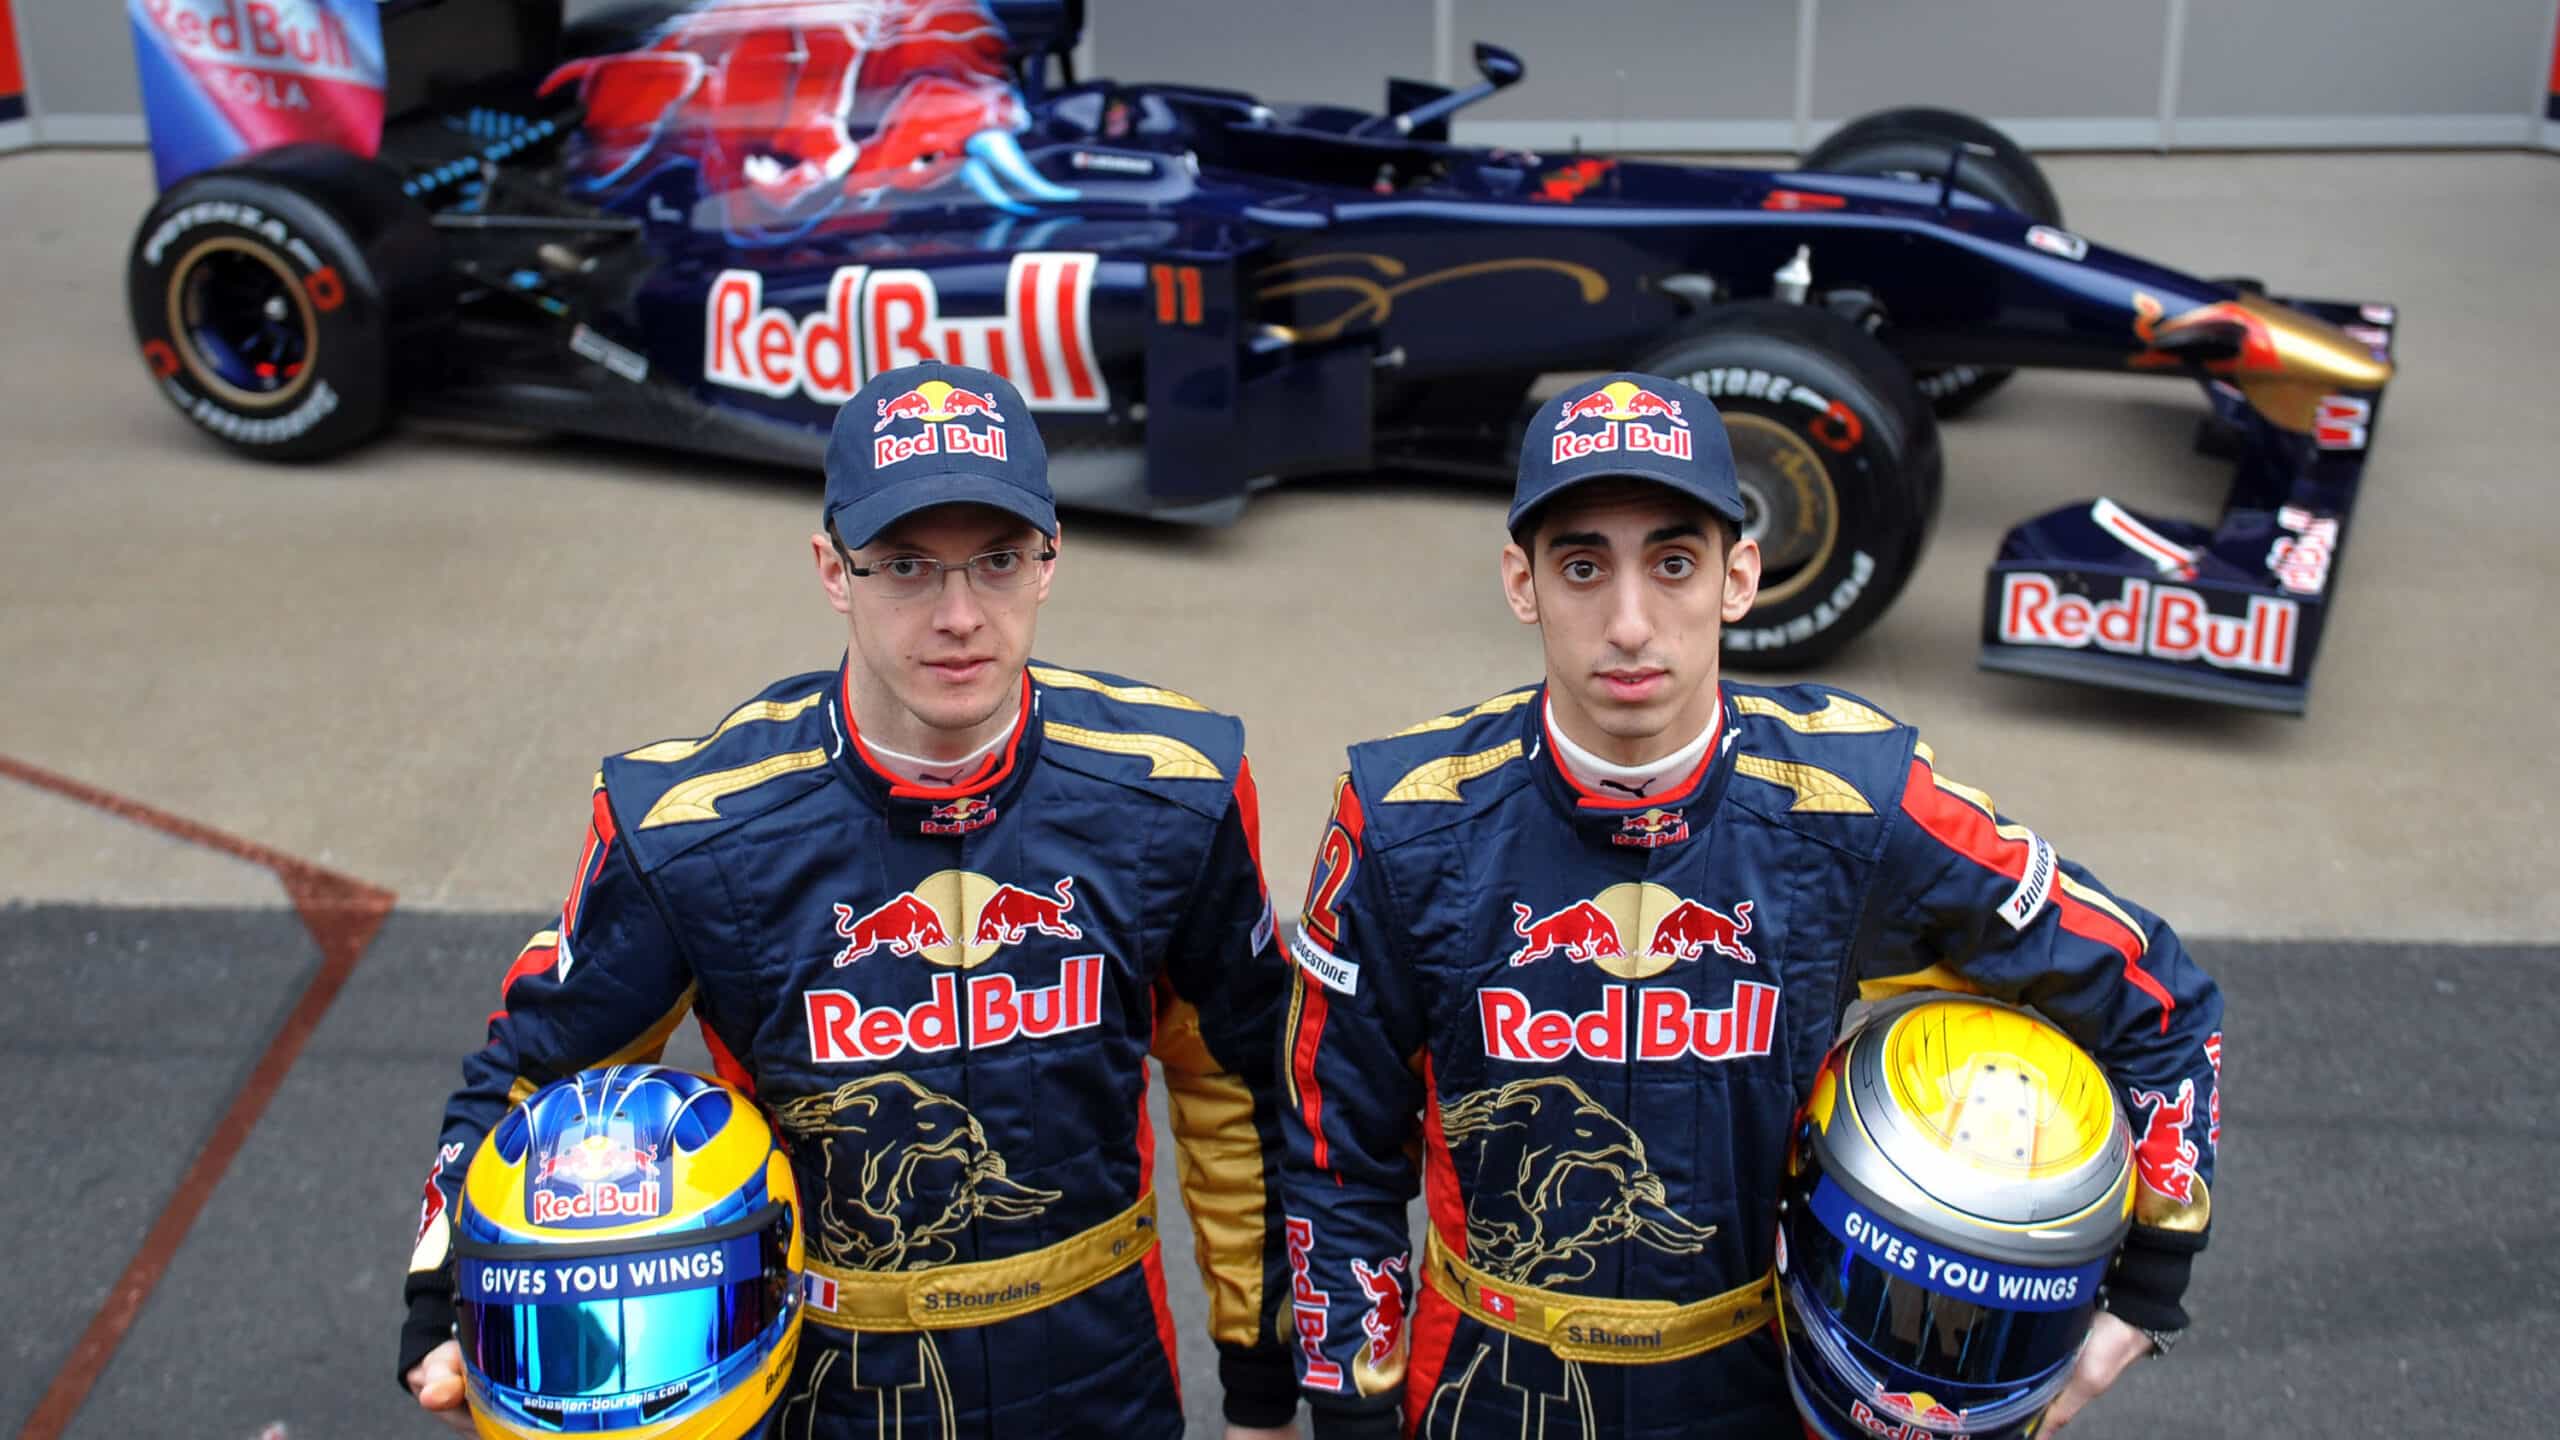 Red Bull F1 team information